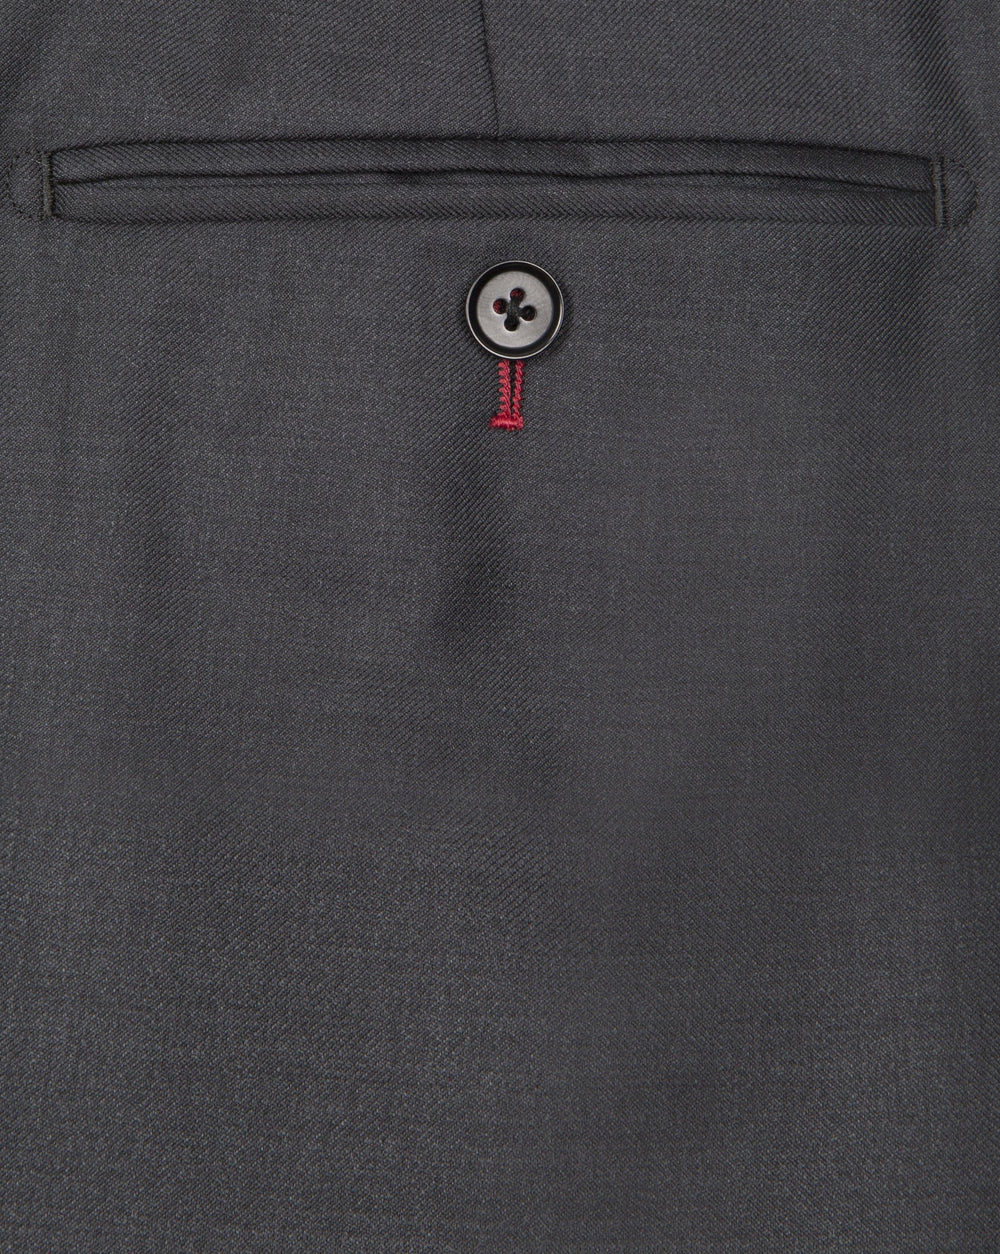 Charcoal Grey Trouser - Mark marengo